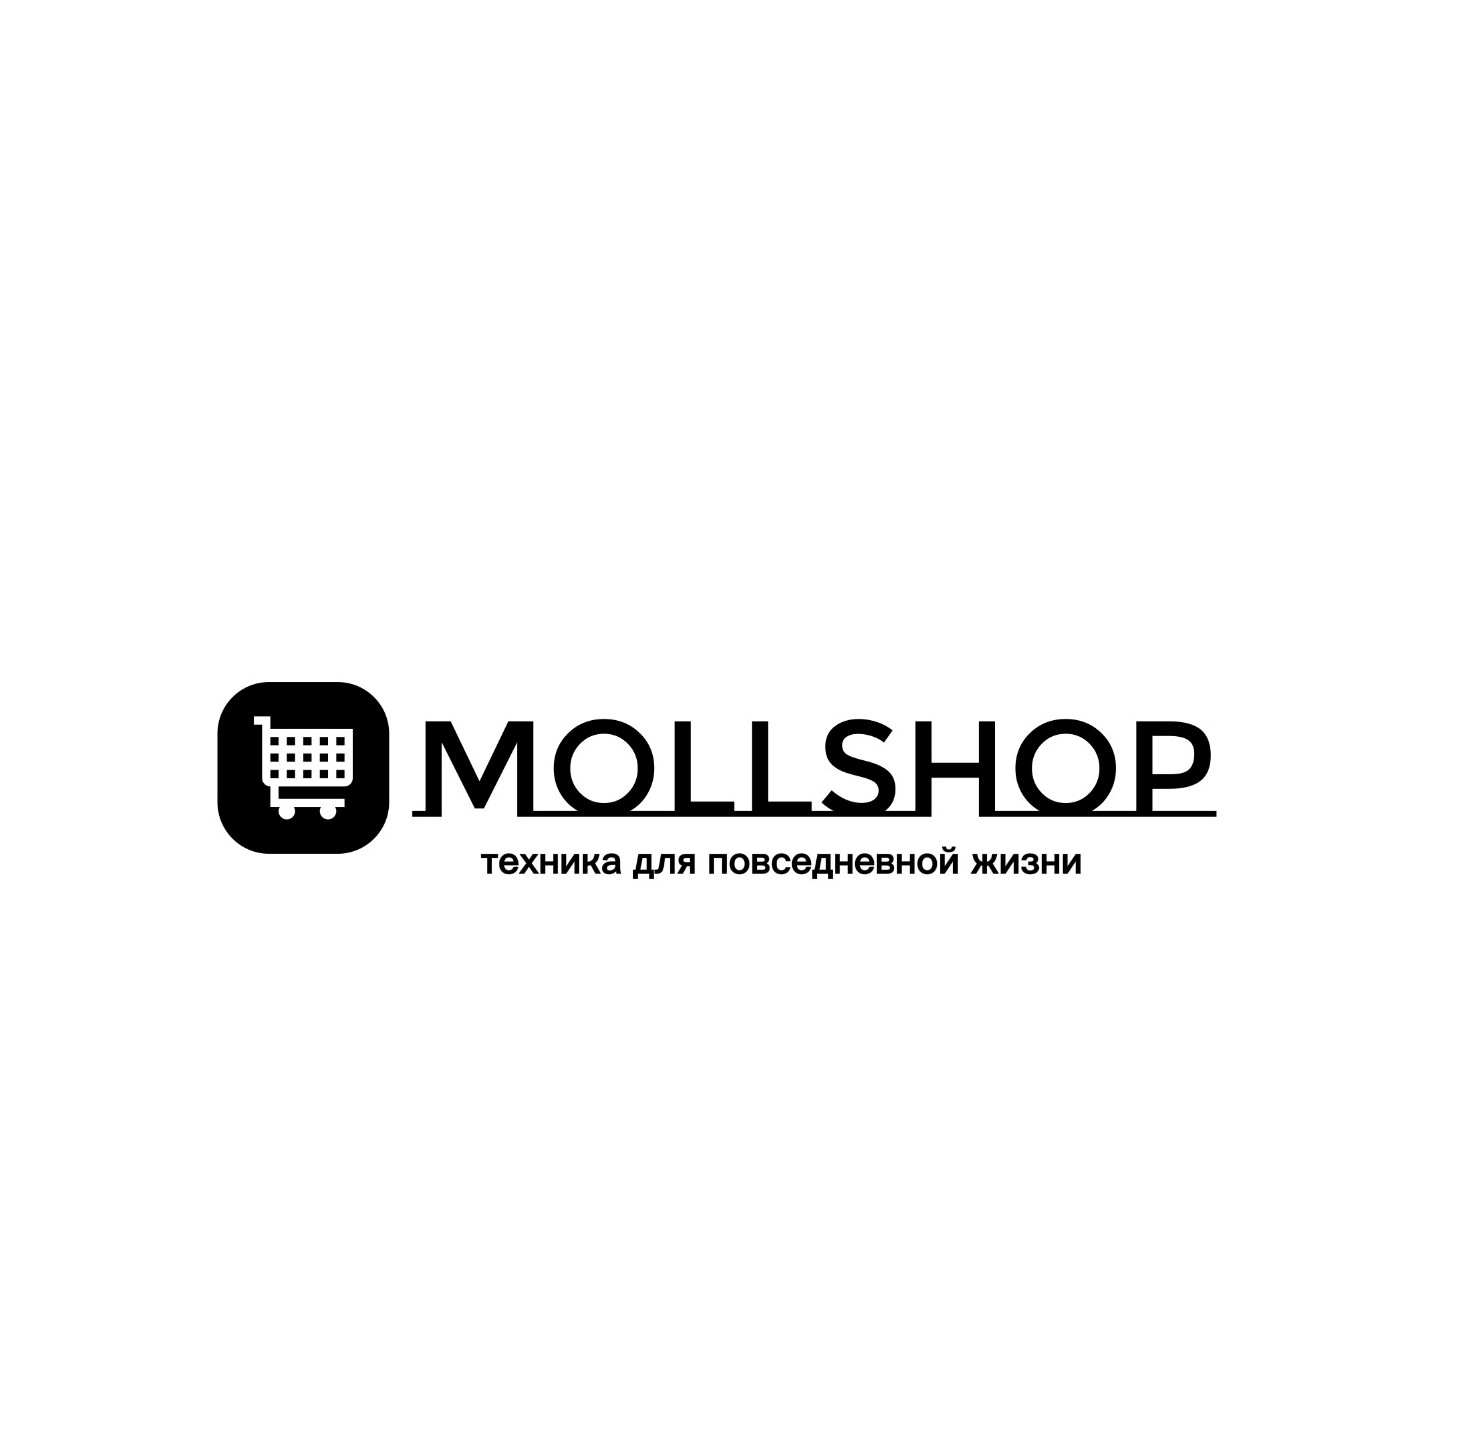 MollShop